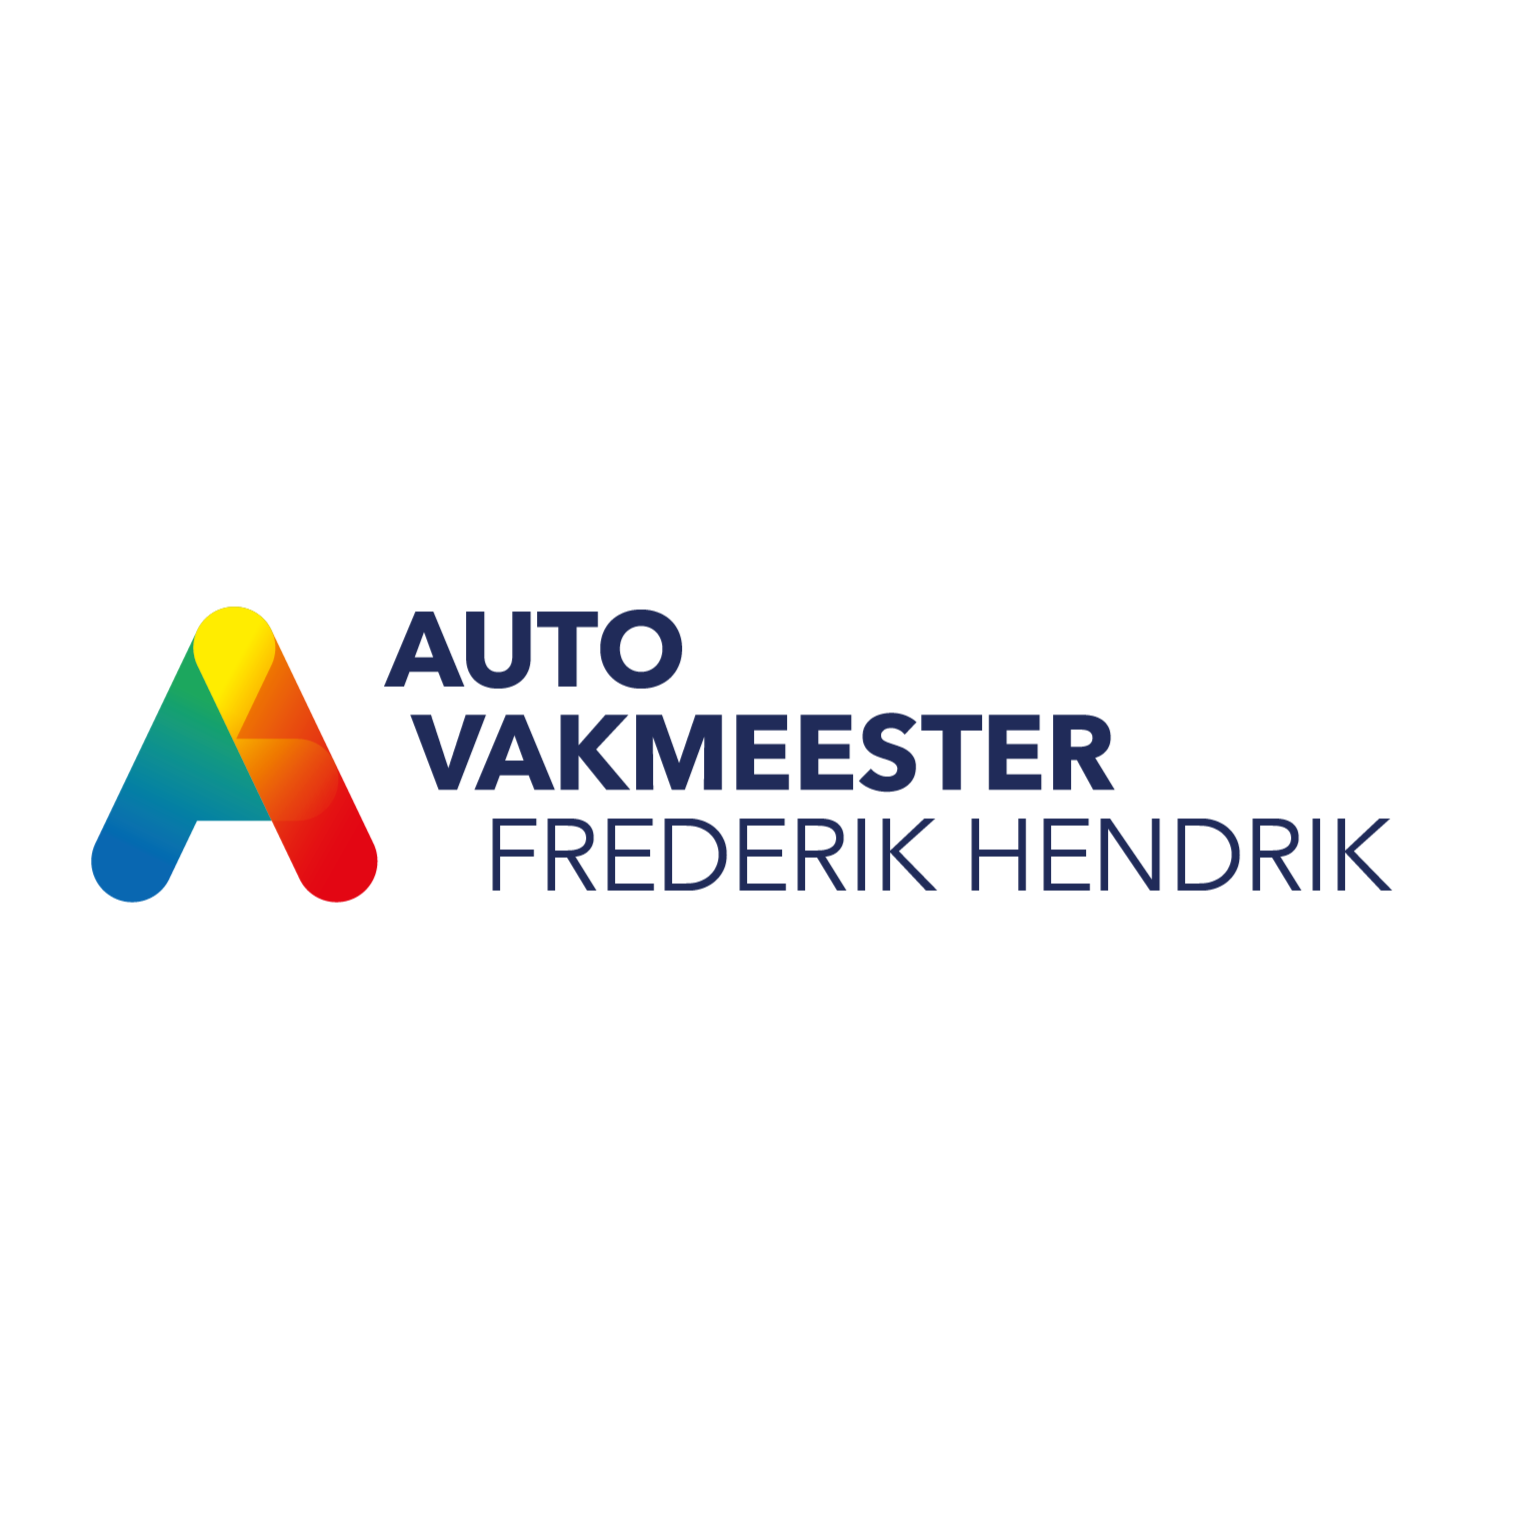 Autovakmeester Frederik Hendrik | Daily Car Service Logo